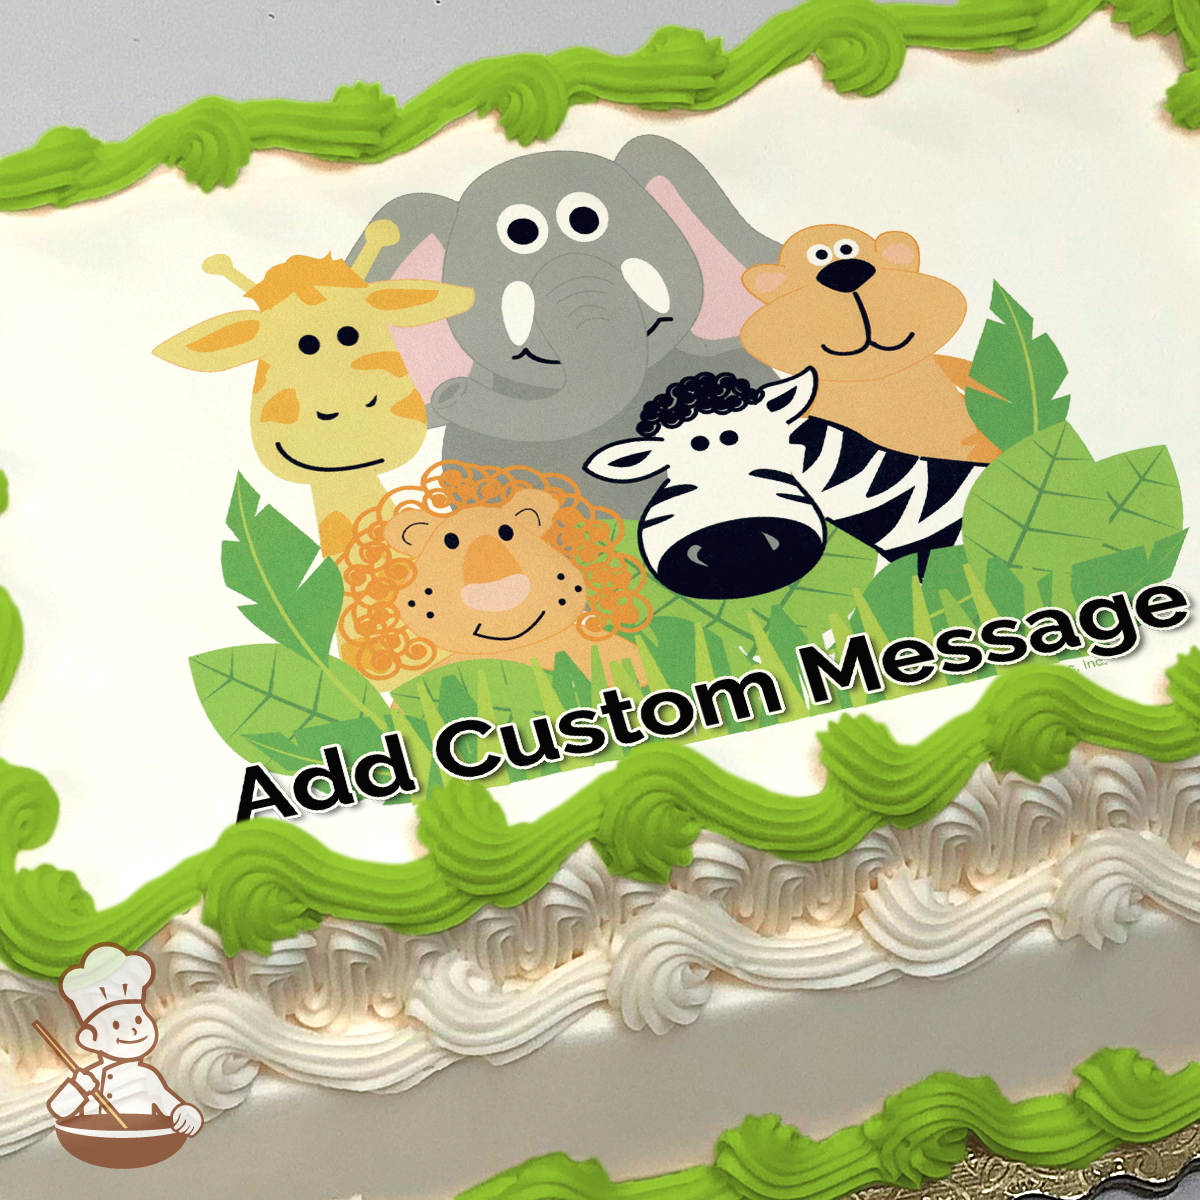 Farm animals: cow, sheep, pig, horse edible cake topper / decoration | eBay